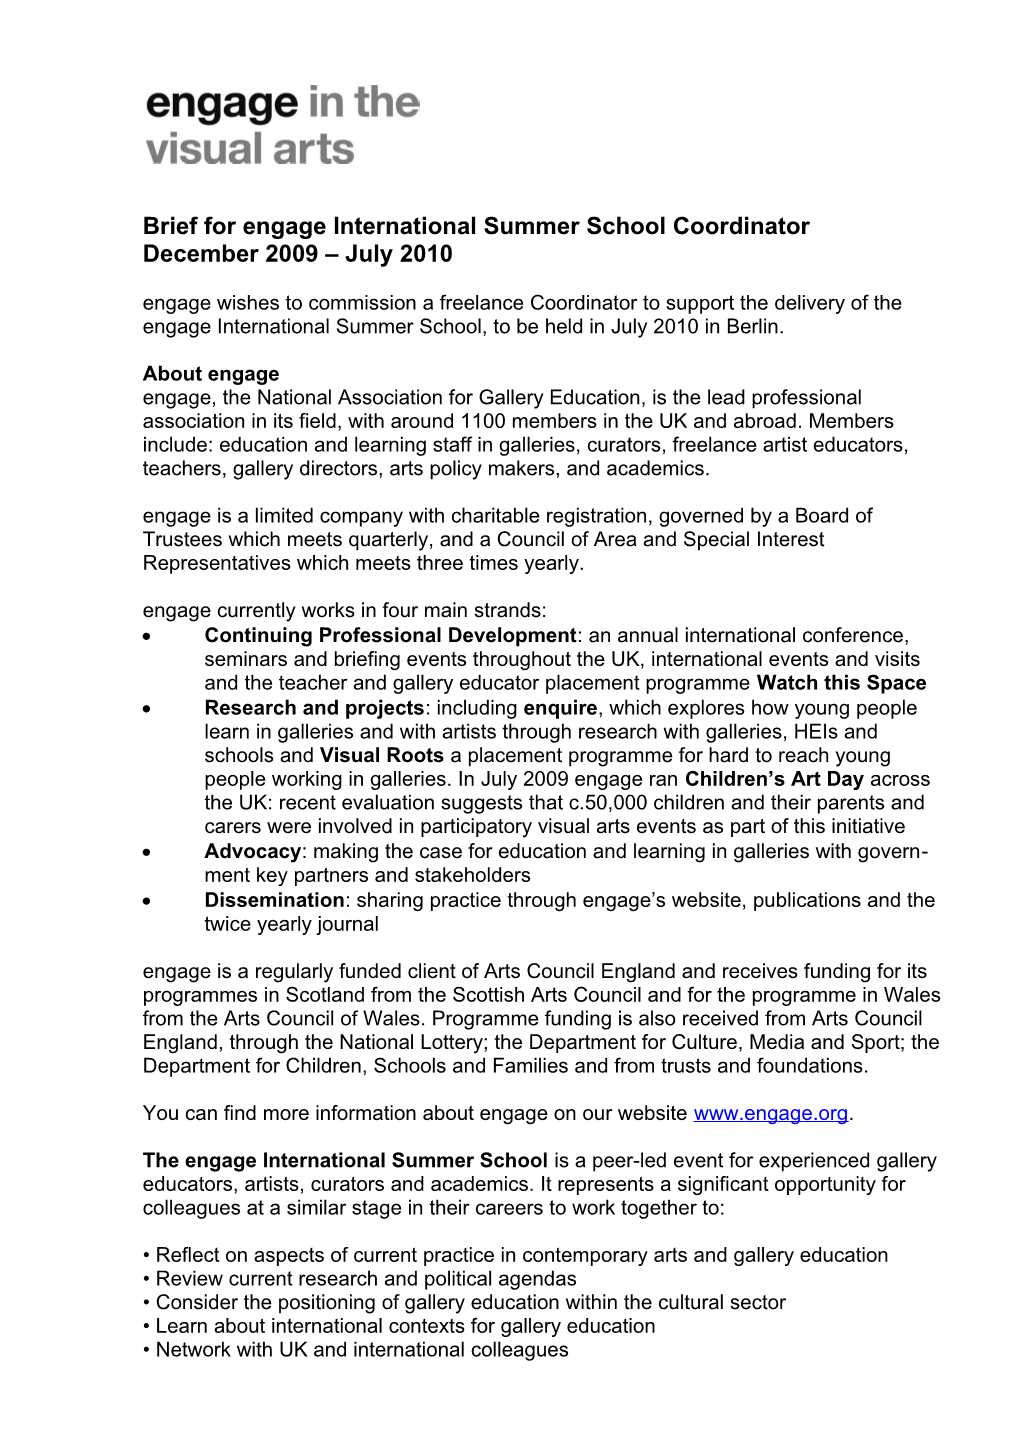 Brief for Engage International Summer School Coordinator